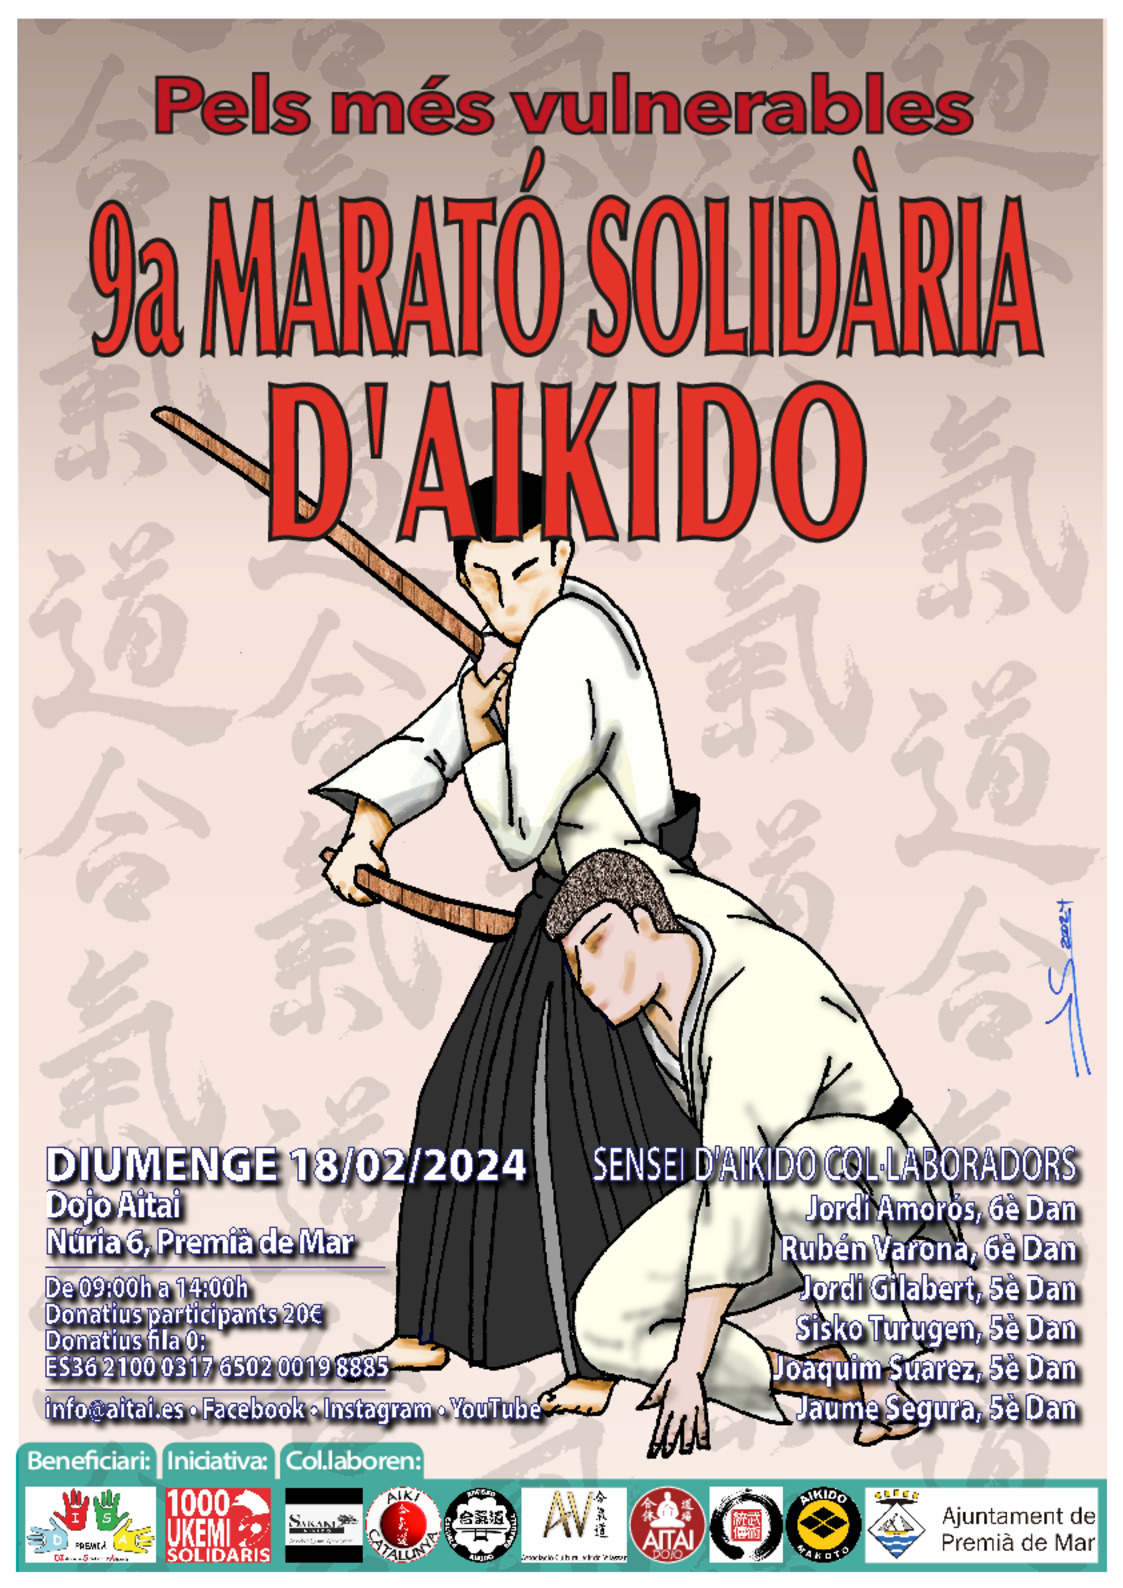 9a Marató solidària d'Aikido